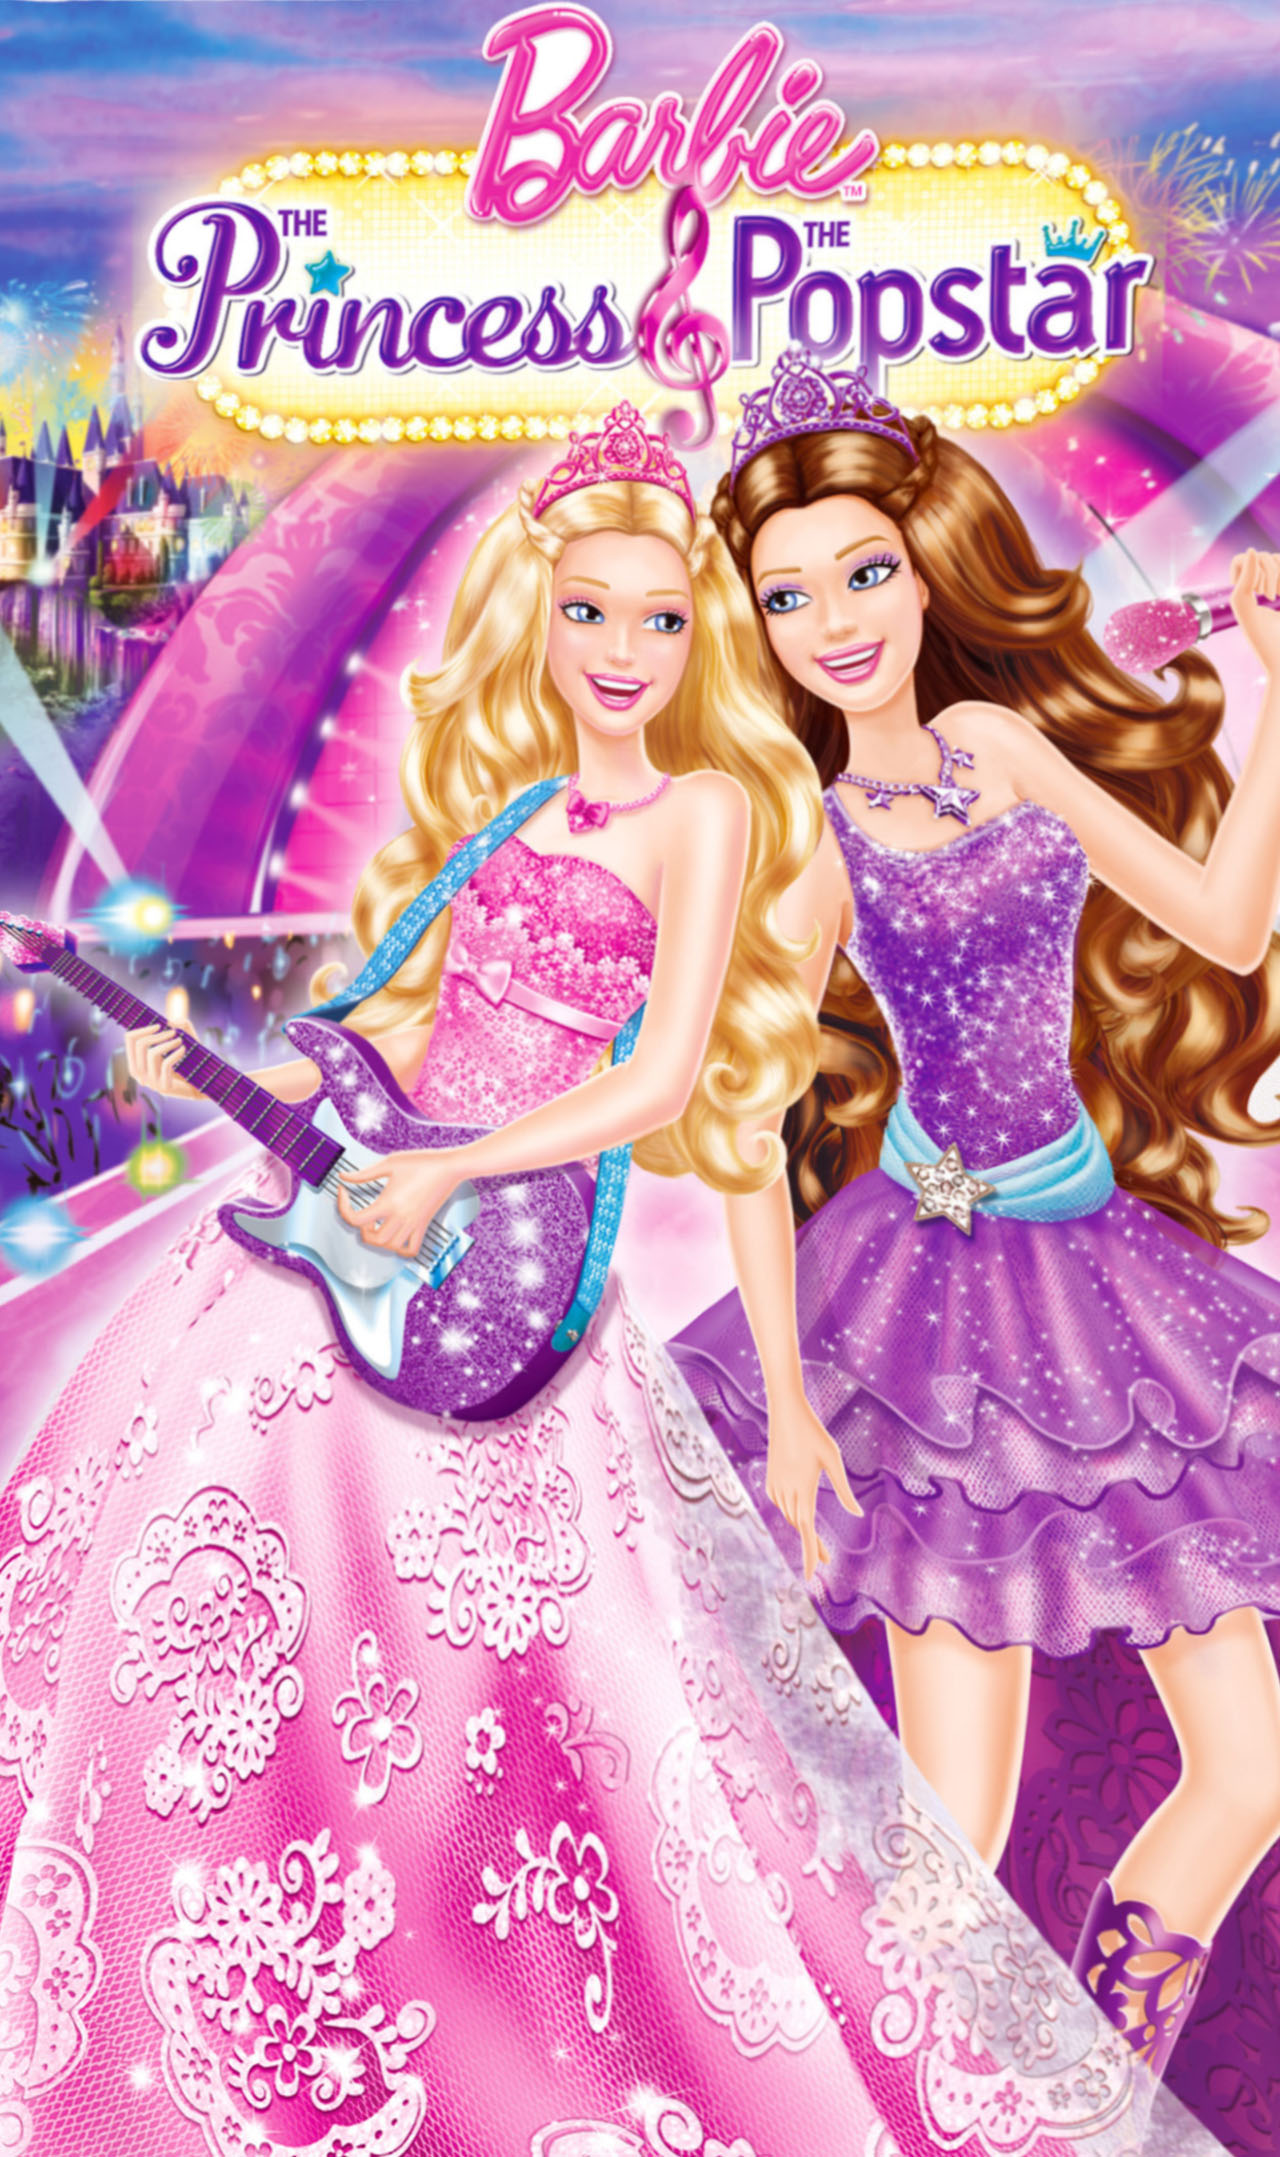 Barbie The Princess And The Popstar Cover - Barbie Movies Photo (29179369) - Fanpop